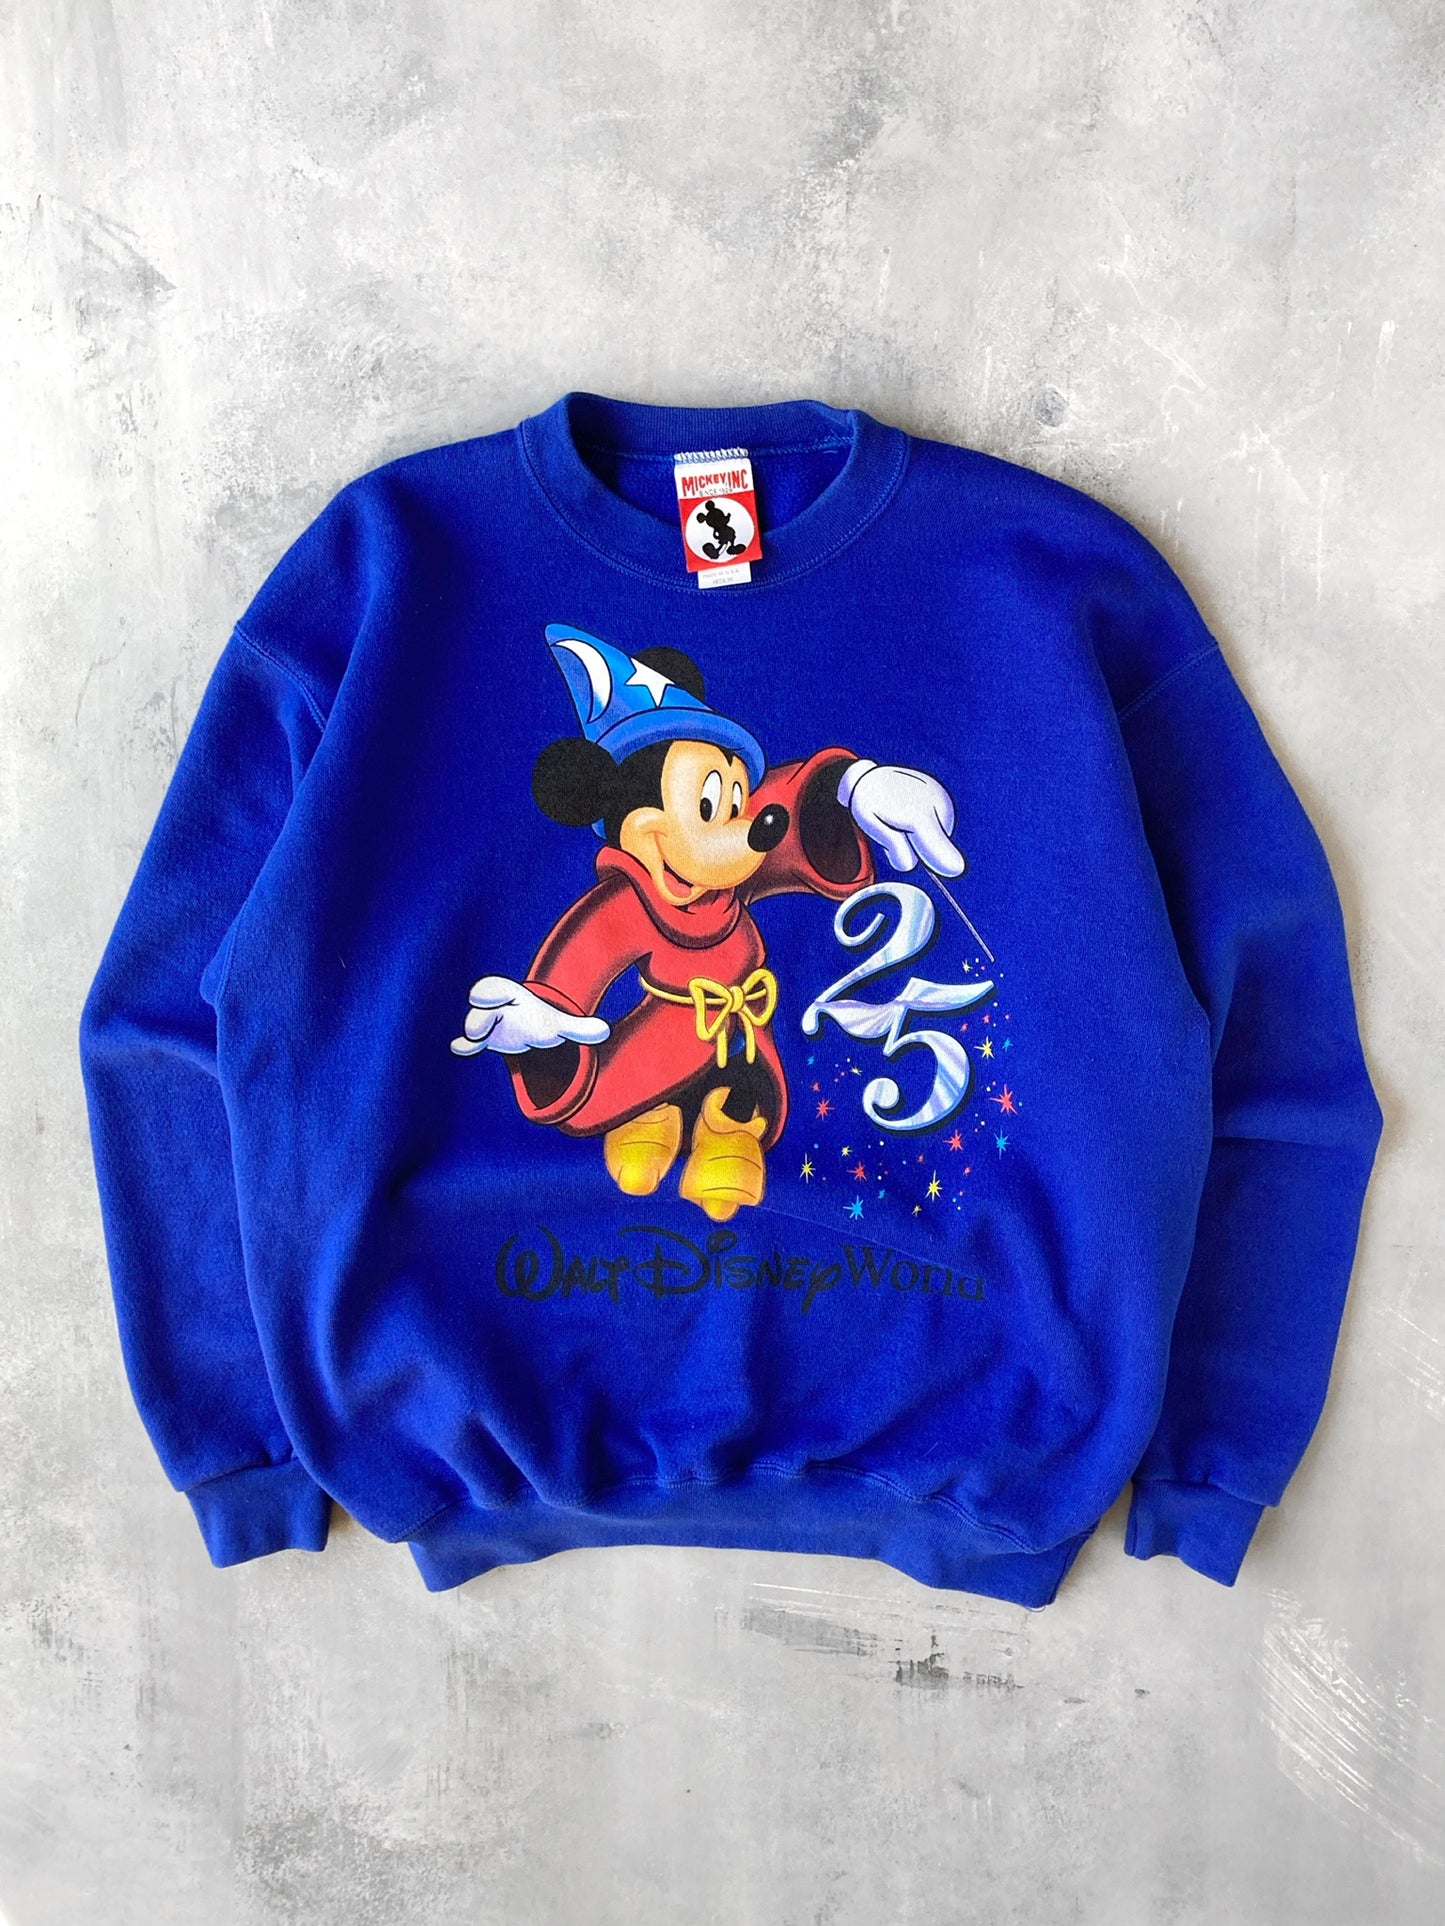 Walt Disney World Sweatshirt 90's - Medium